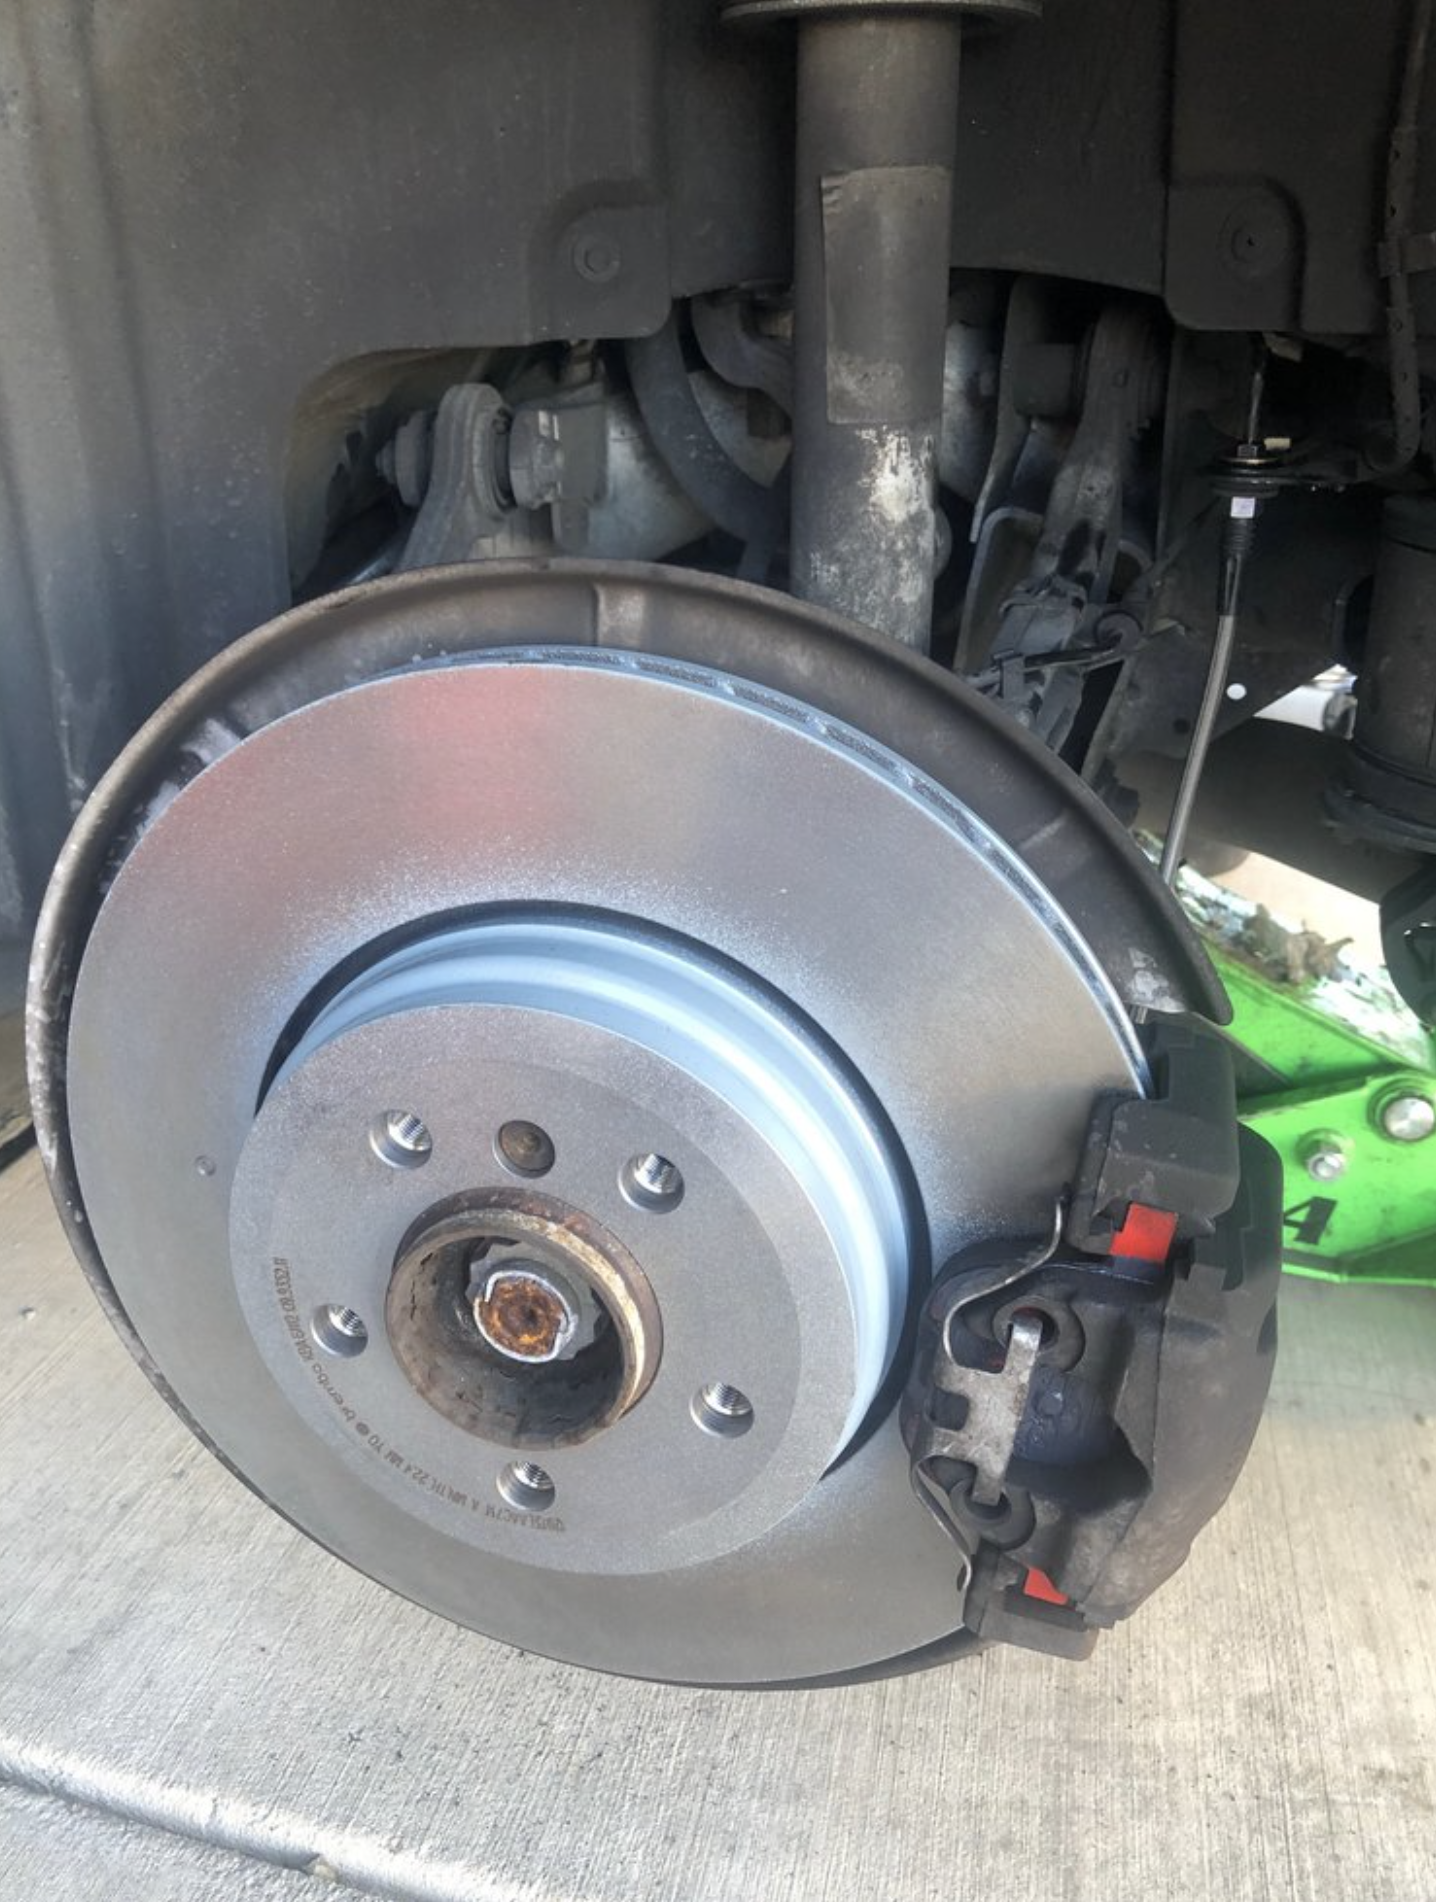 this image shows brake service in Tampa, FL